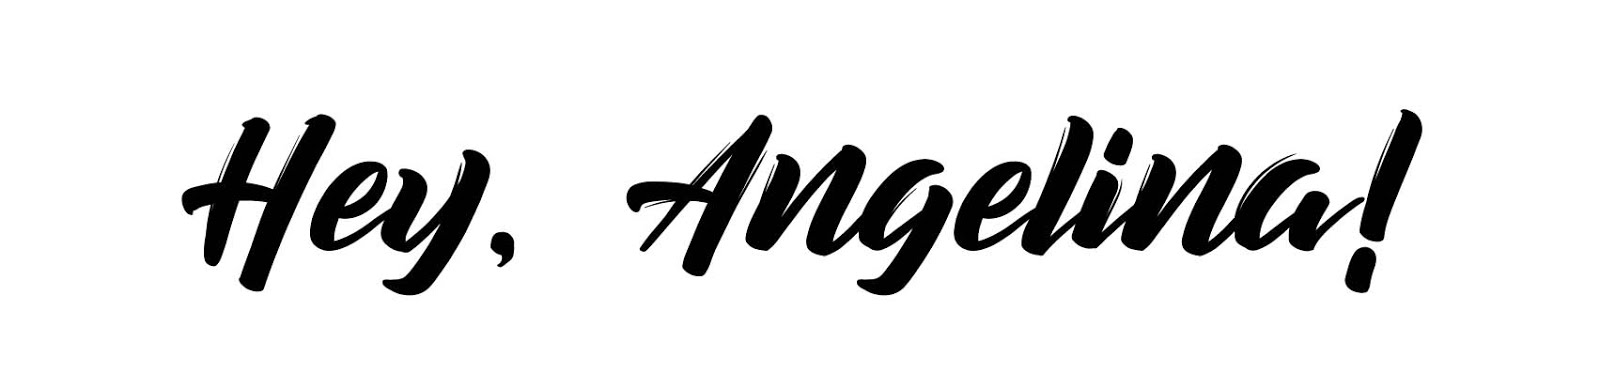 Hey, Angelina! - Lifestyle and Beauty Blog